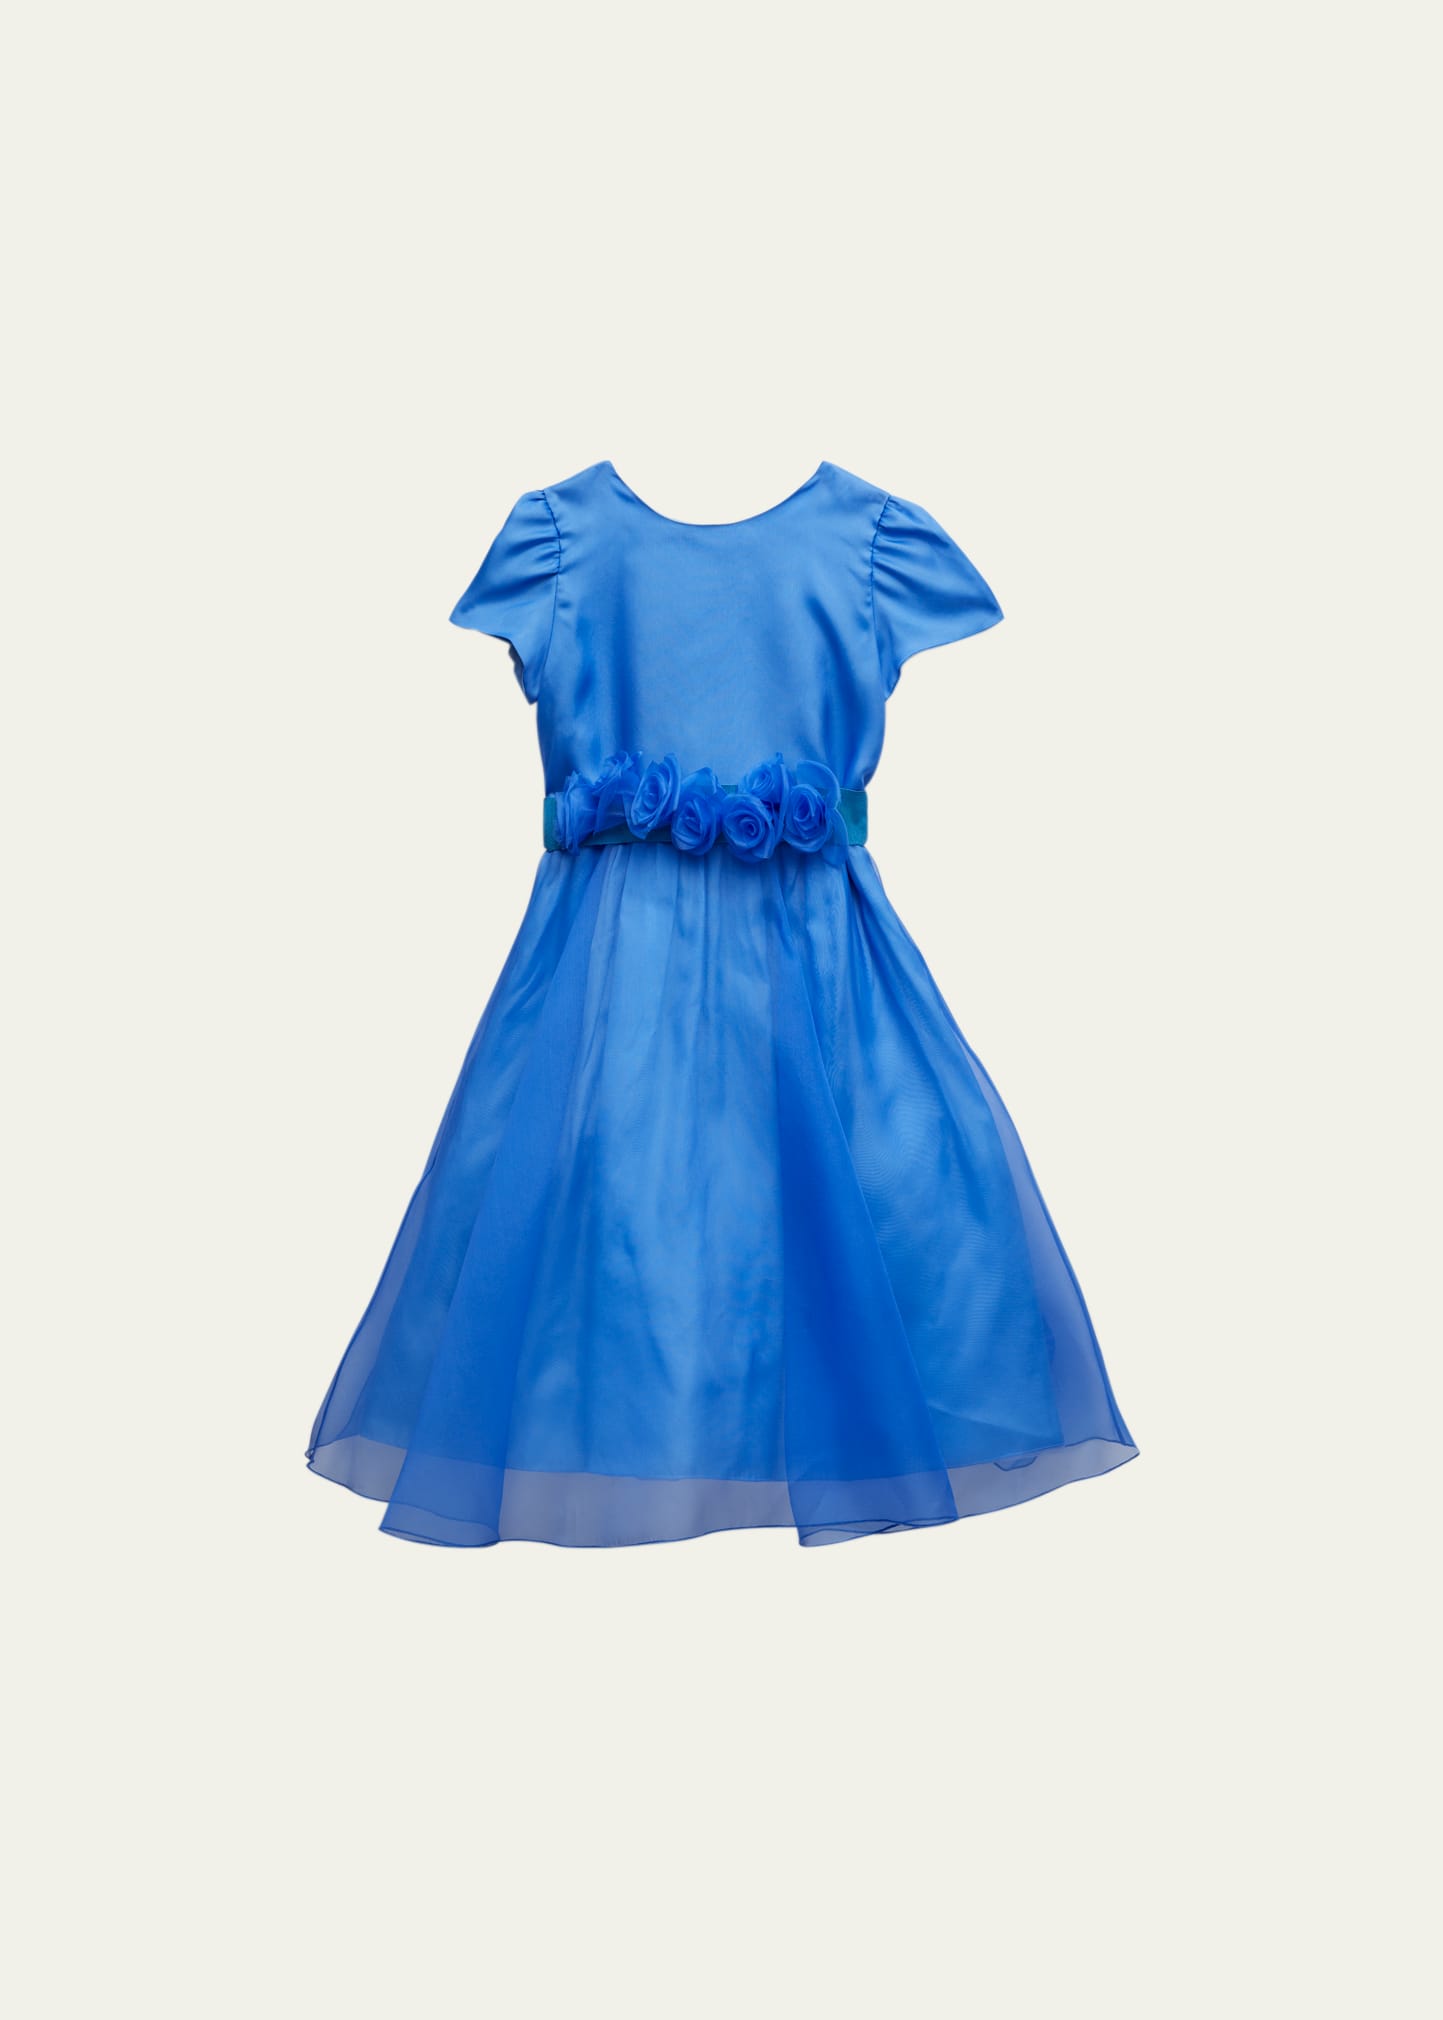 Mariella Ferrari Kids' Girl's Flower Dress With Shine In Blue